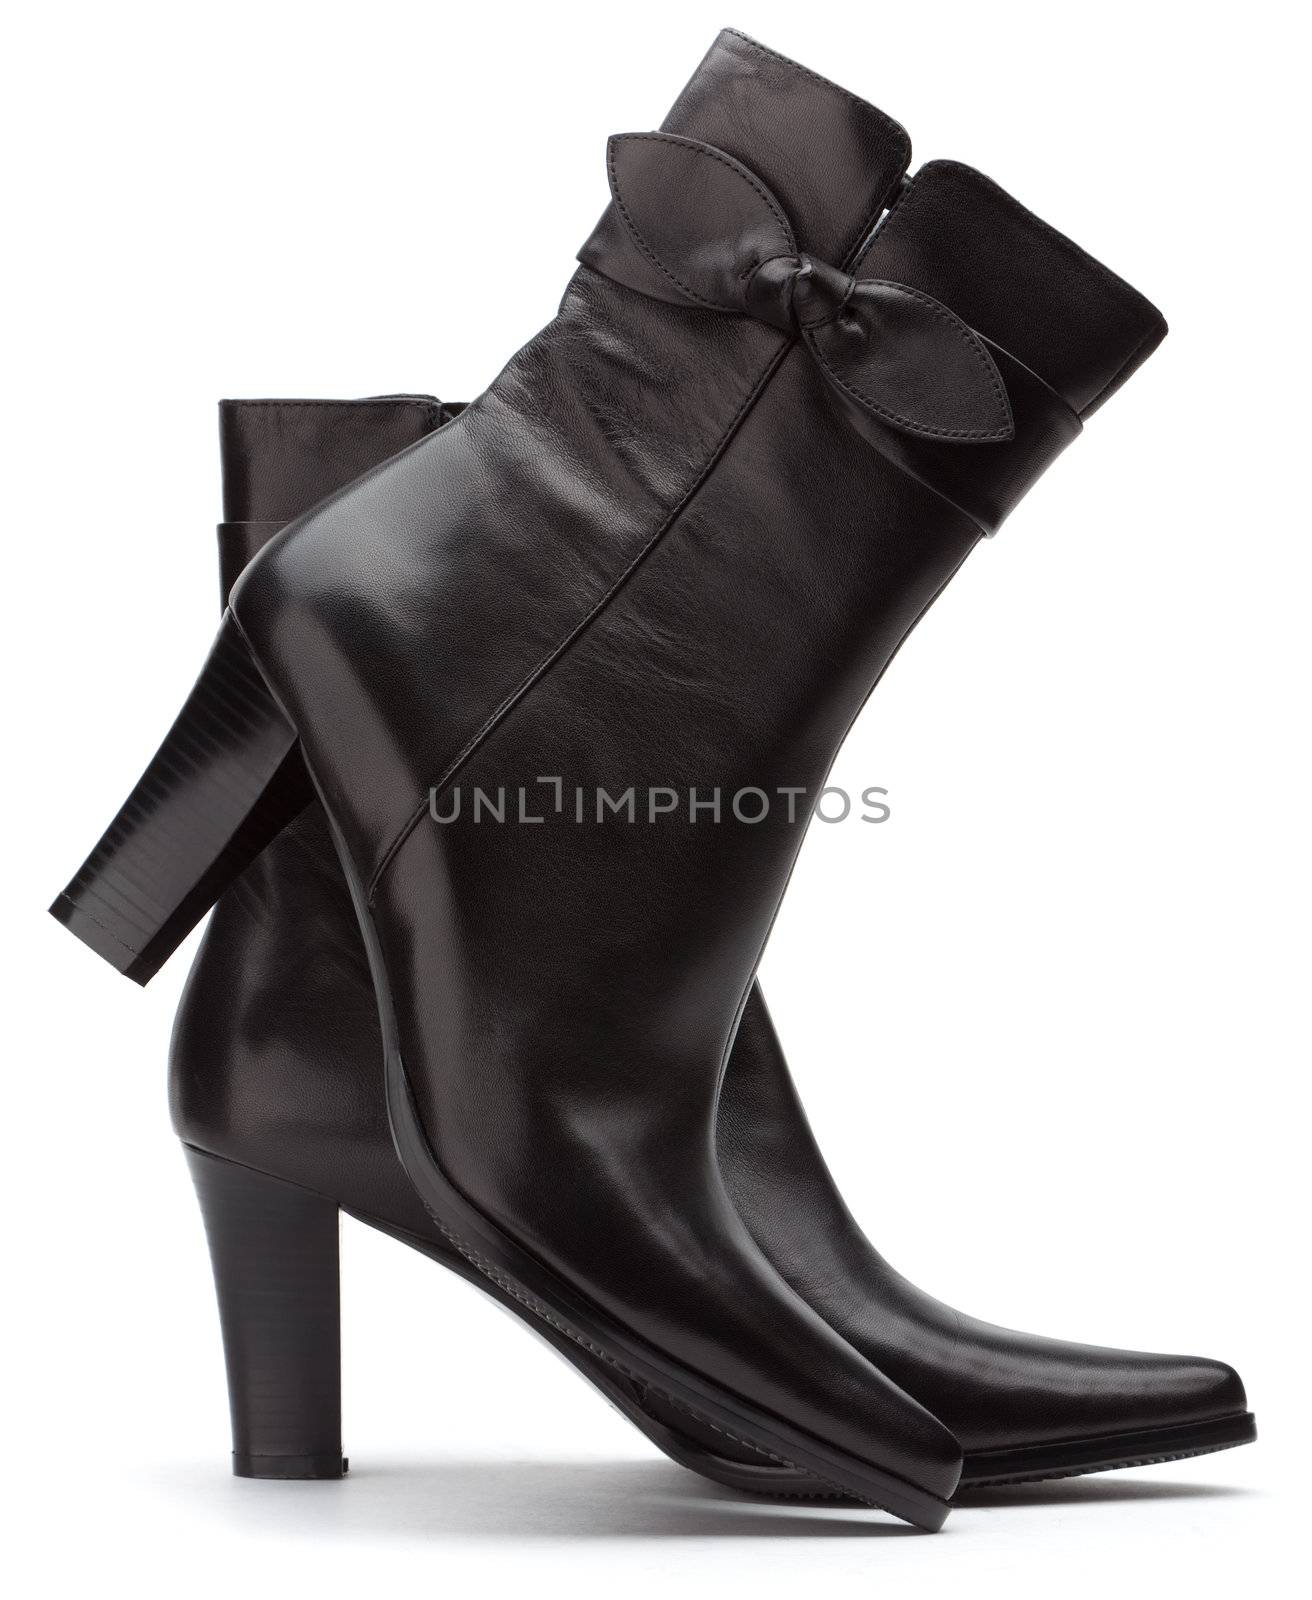 Ladies short black boots by Antartis